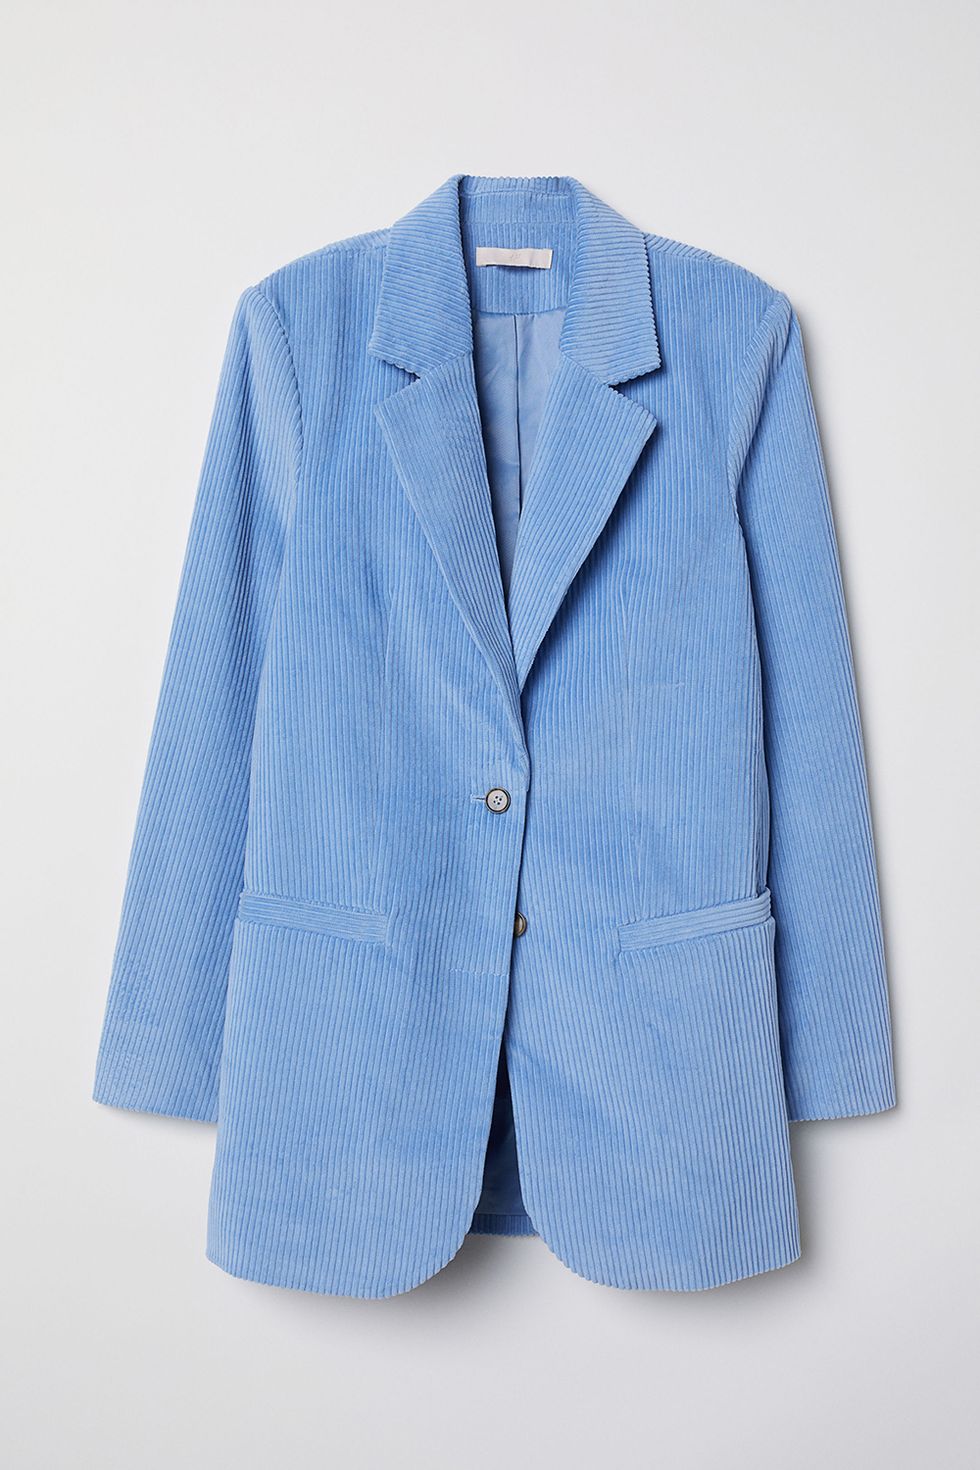 Clothing, Blue, Outerwear, Blazer, Jacket, Suit, Button, Formal wear, Design, Sleeve, 